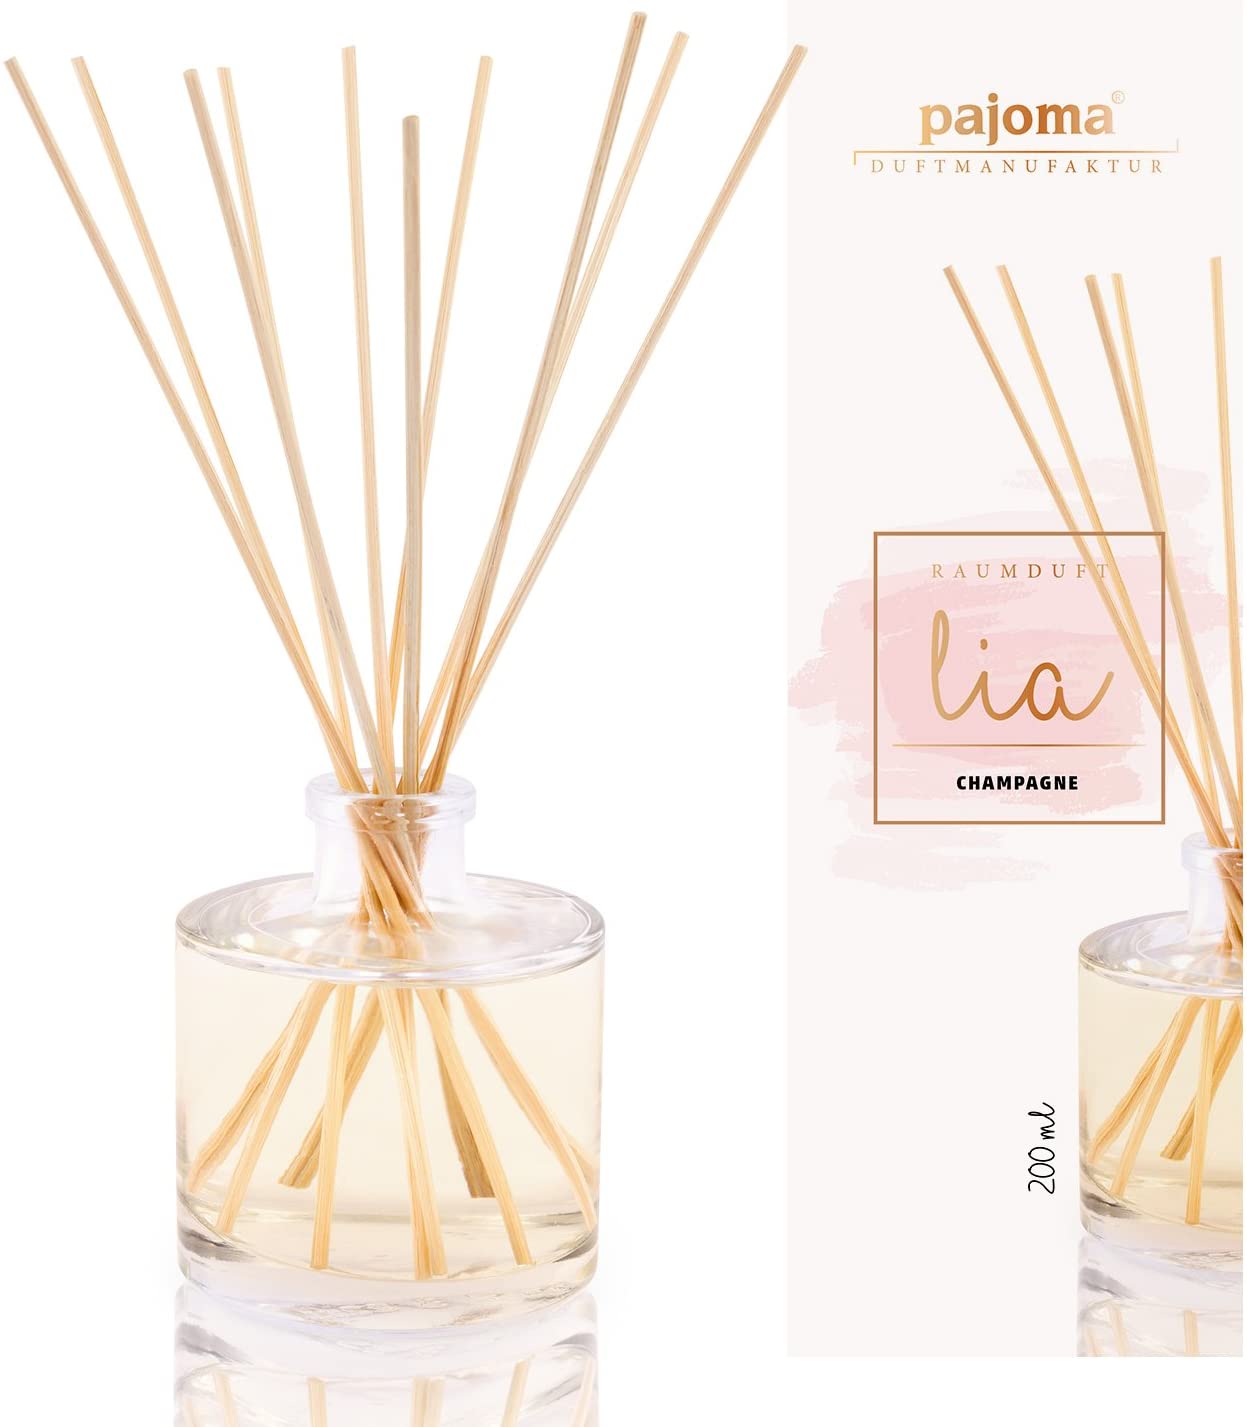 PAJOMA Premium Lia Room Fragrance 200ml Rose Gold Edition, 1 x 200ml Champagne Deluxe Gift Set